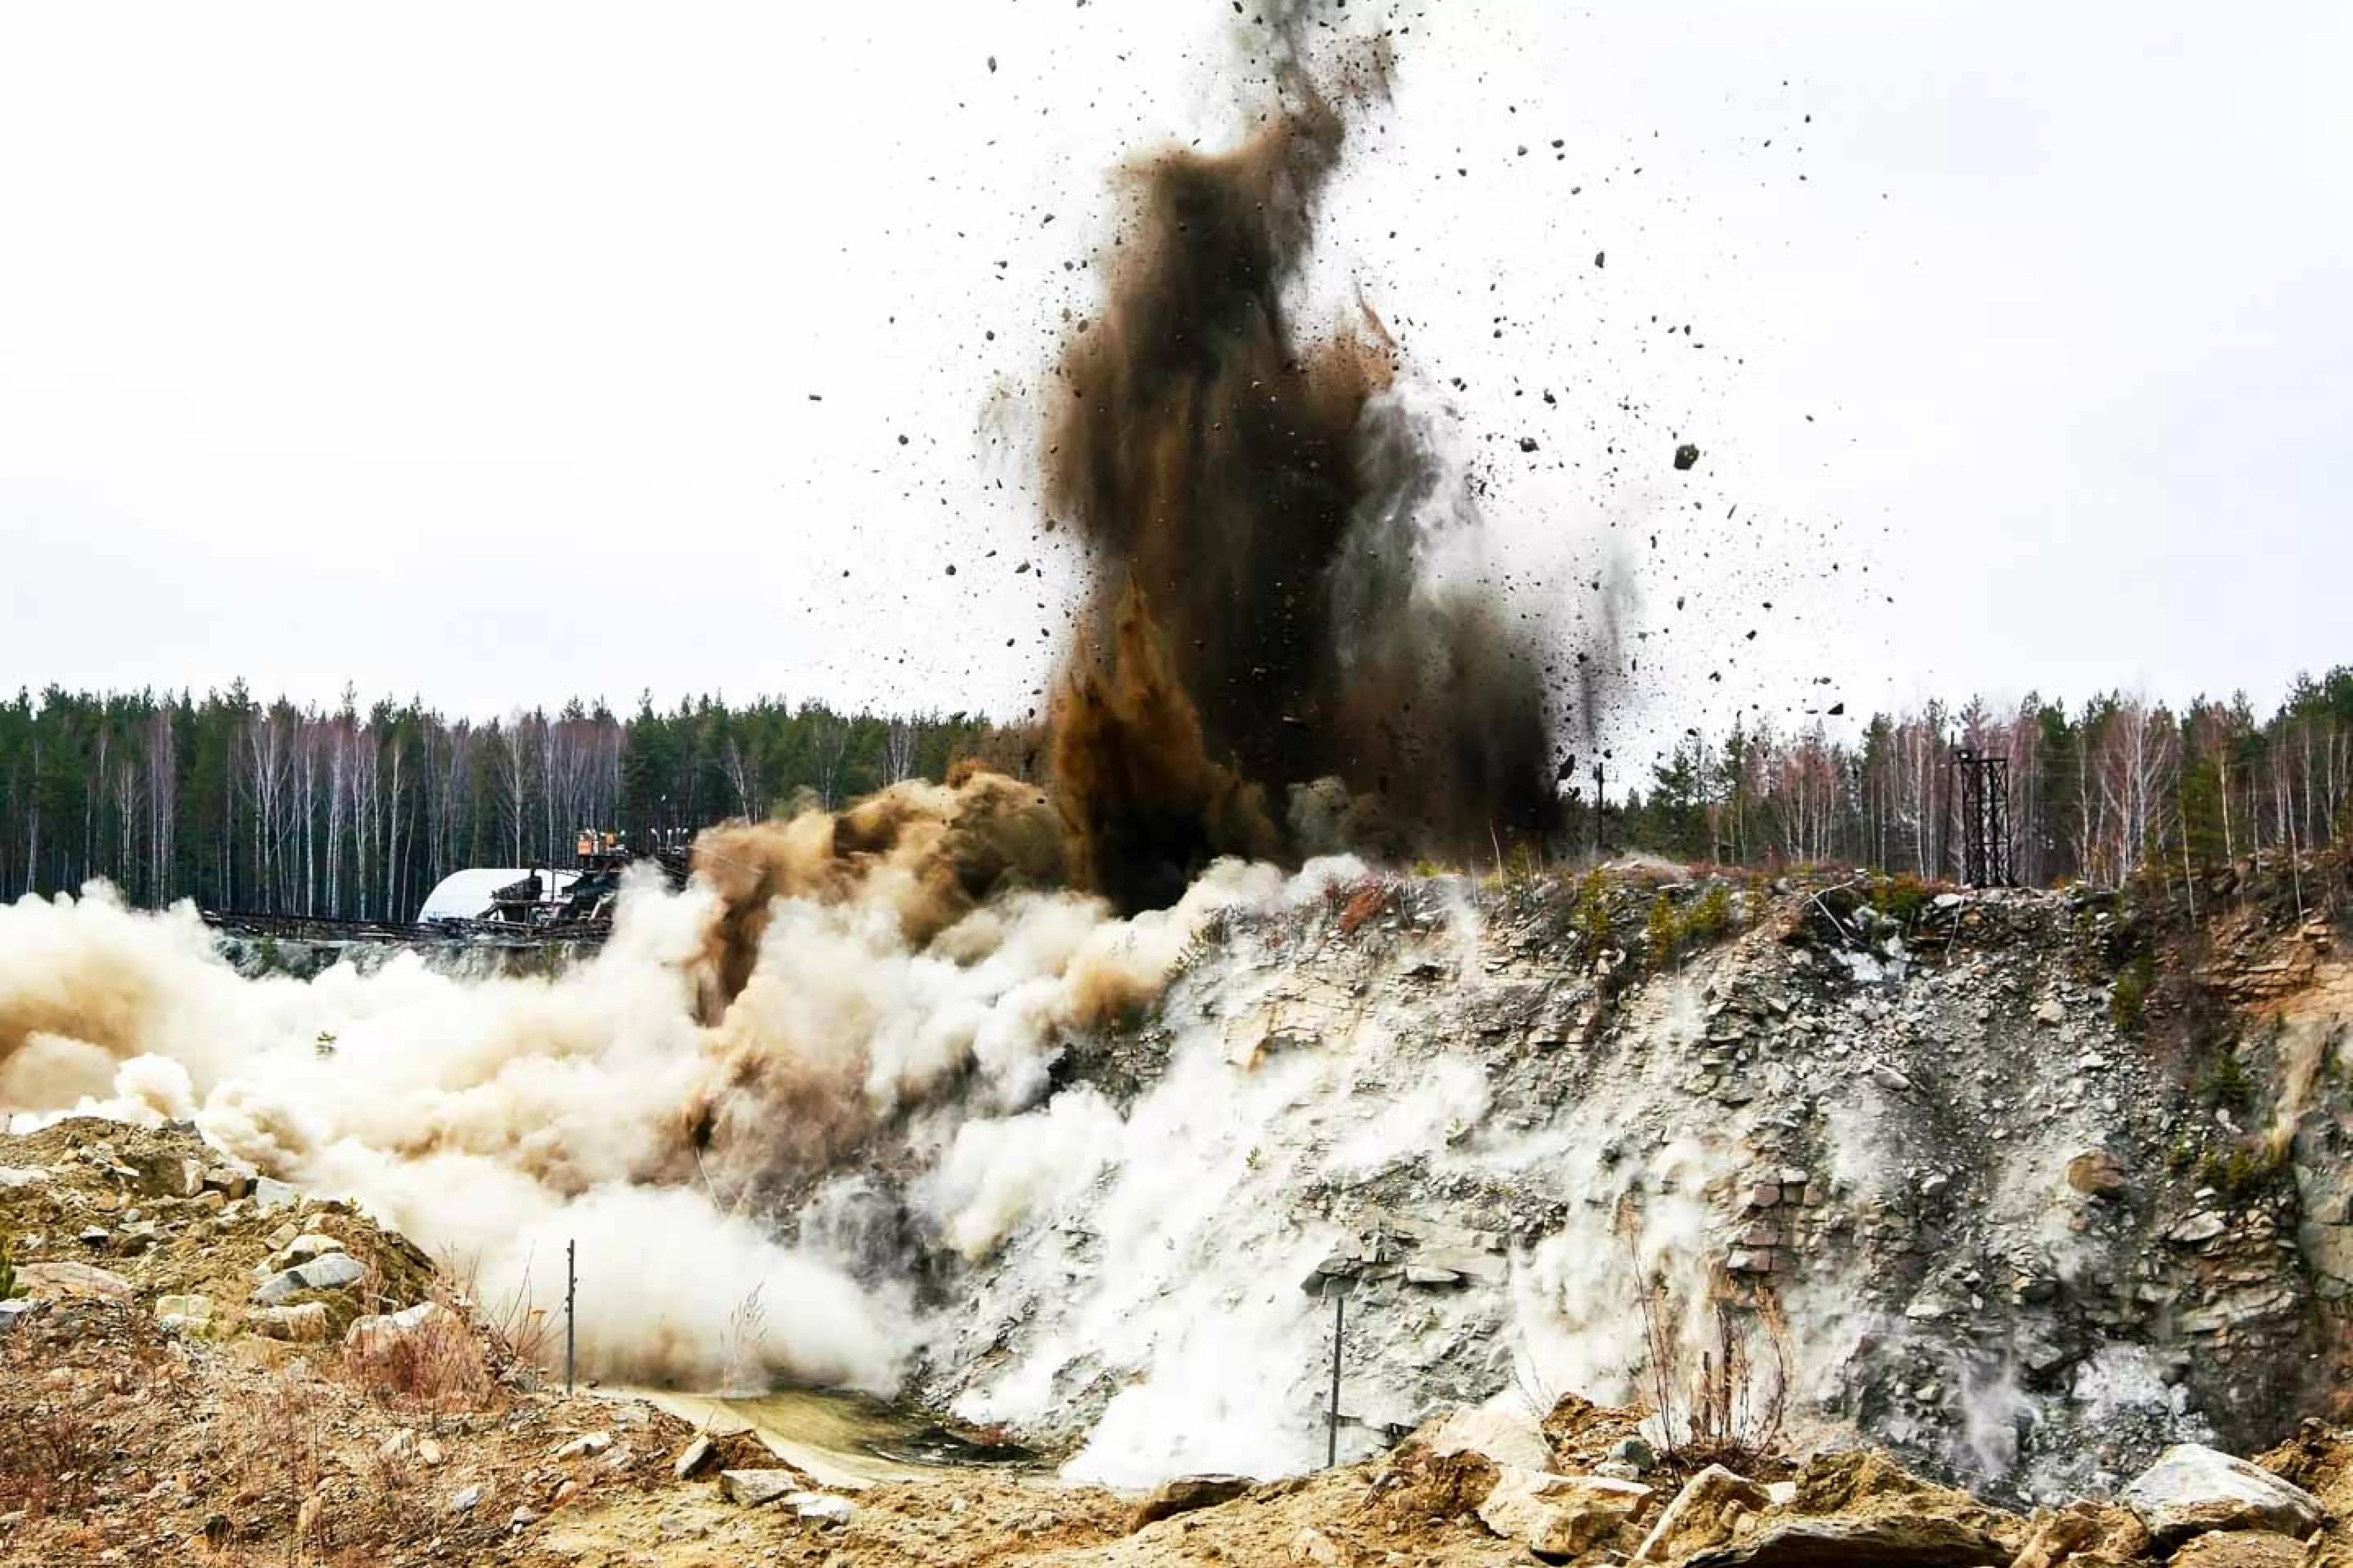 Plume of dirt rises from quarry blast